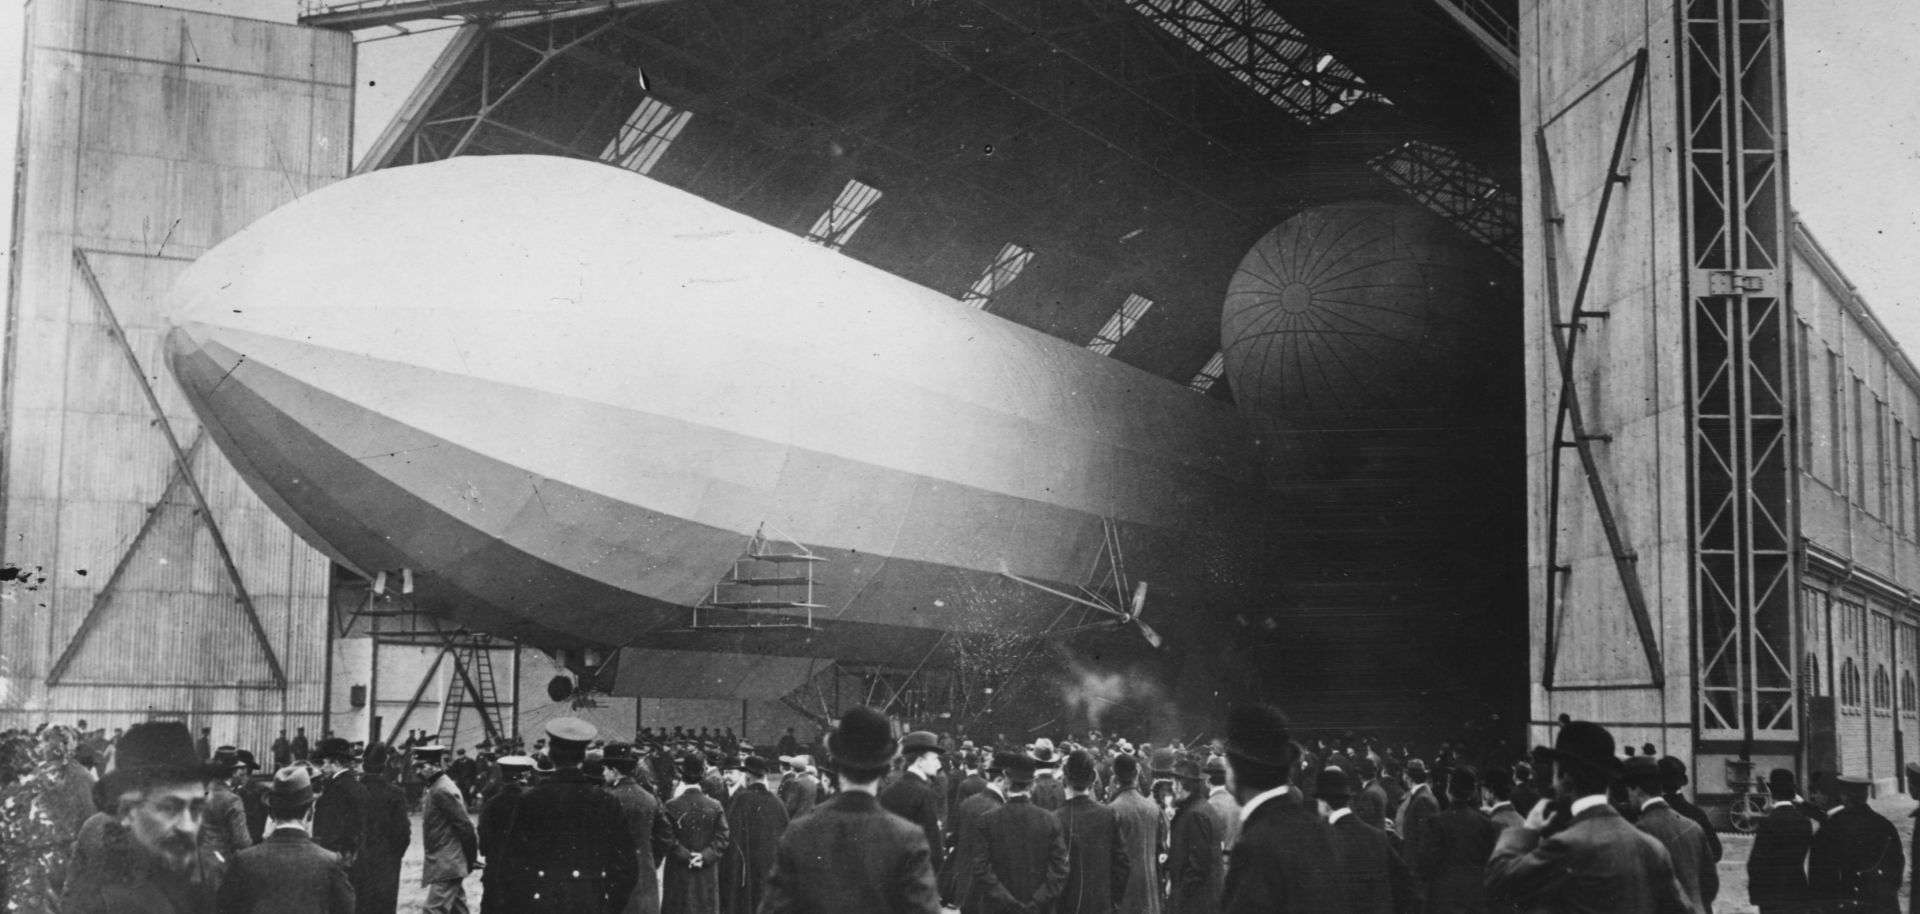 Zeppelin Strike on Britain Foreshadows the Blitz